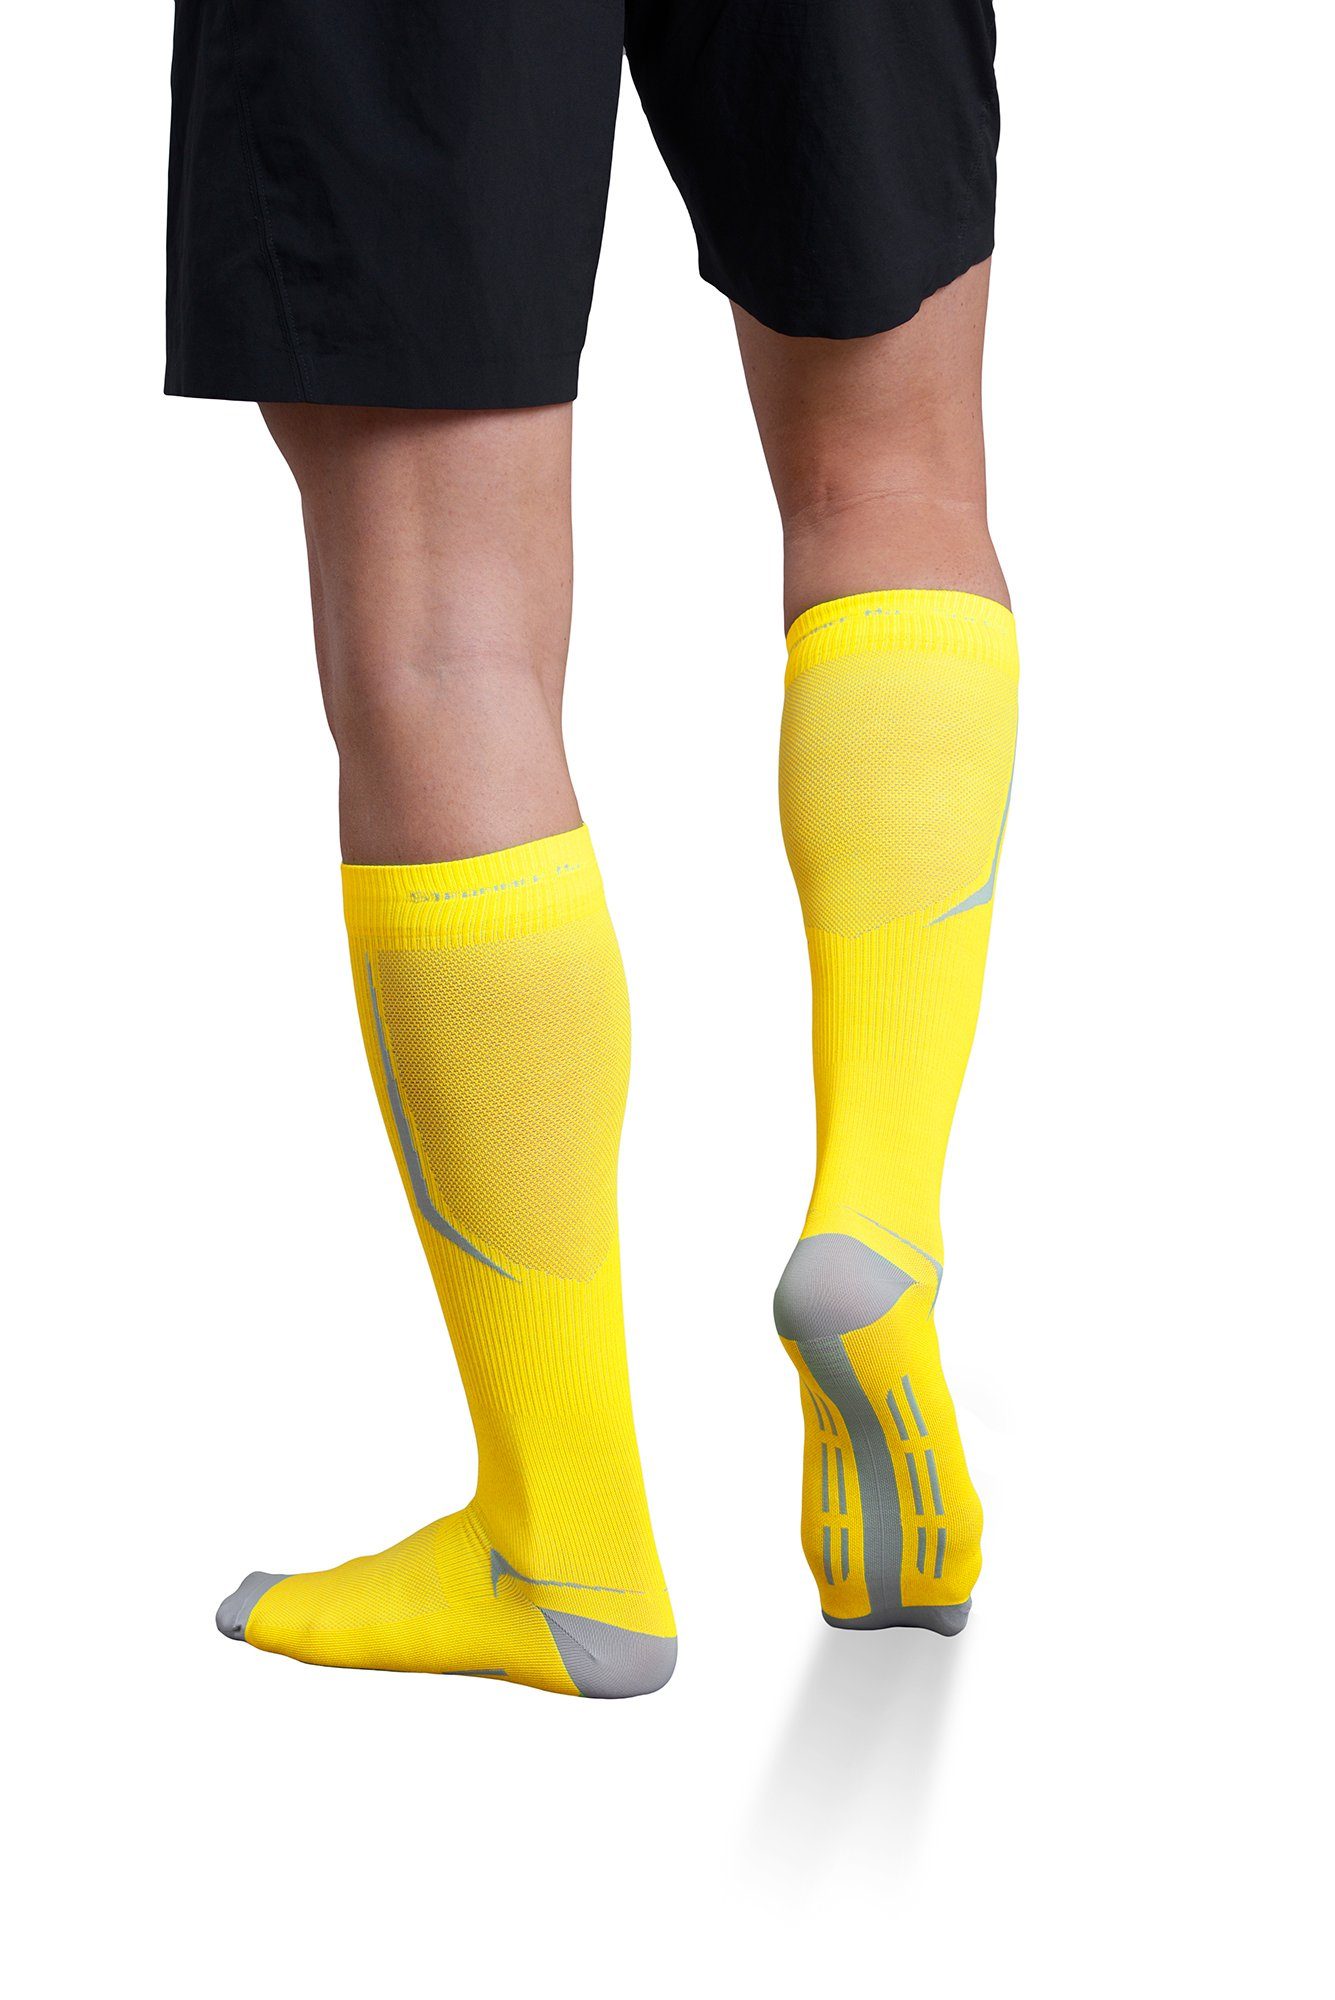 Kompressionsstrümpfe atmungsaktiv, Performance® Gelb Max Performance antibakteriell Strammer Compression Socks